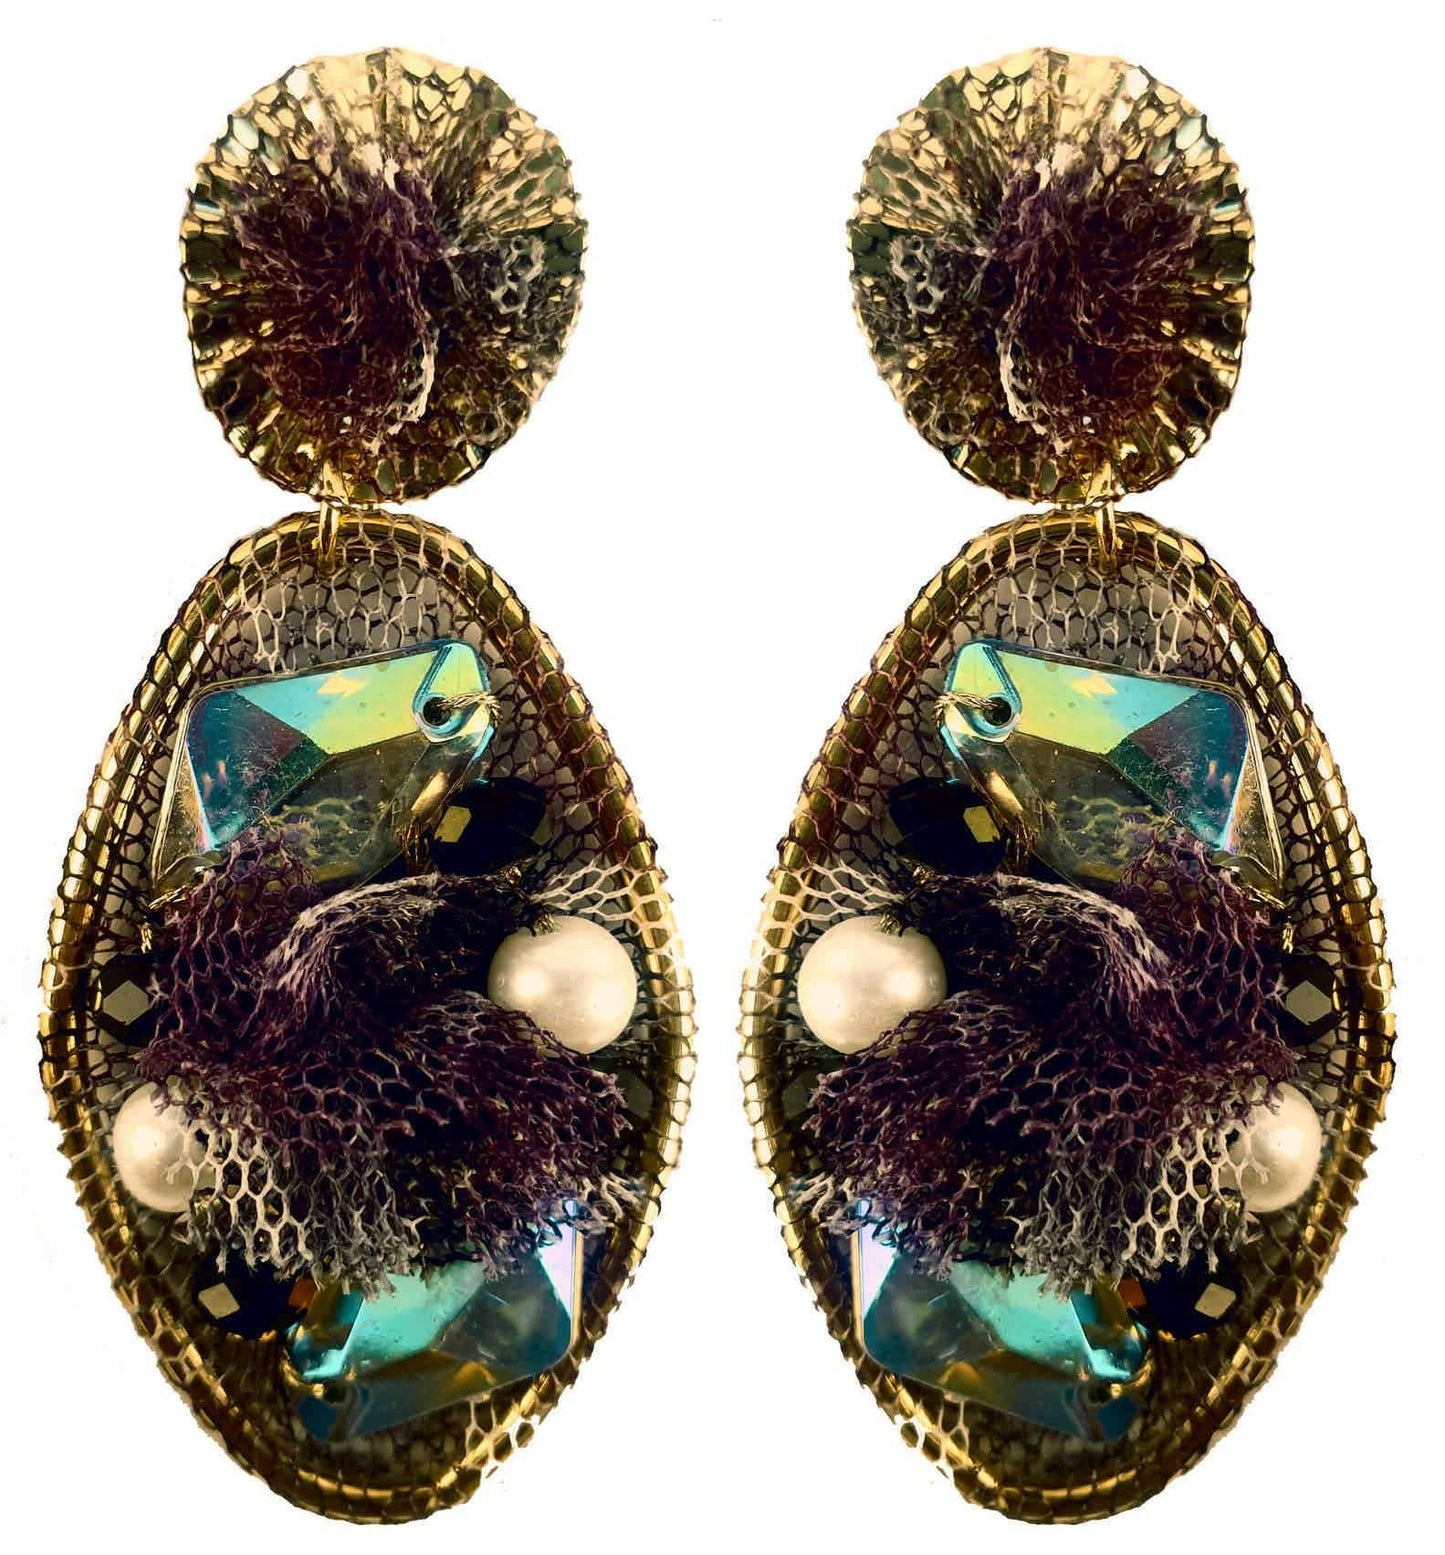 Indian Petals Rhinestones on Net Design Fancy Artificial Imitation Fashion Earrings for Girls Women - Indian Petals